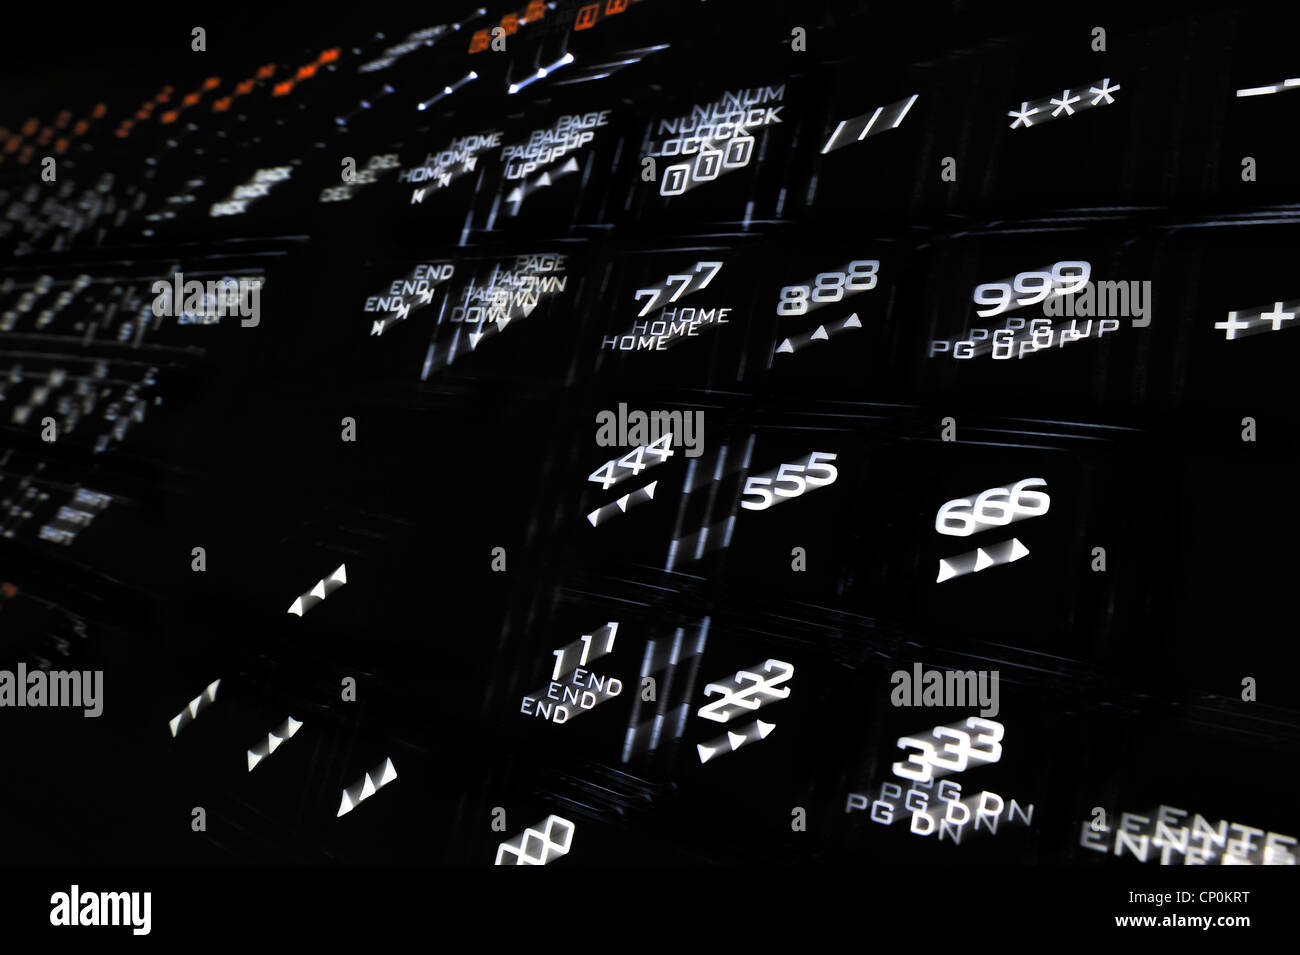 Tecnología abstracta imagen mostrando equipo negro teclado iluminado con caracteres blancos sobre teclas retroiluminadas saltar Foto de stock